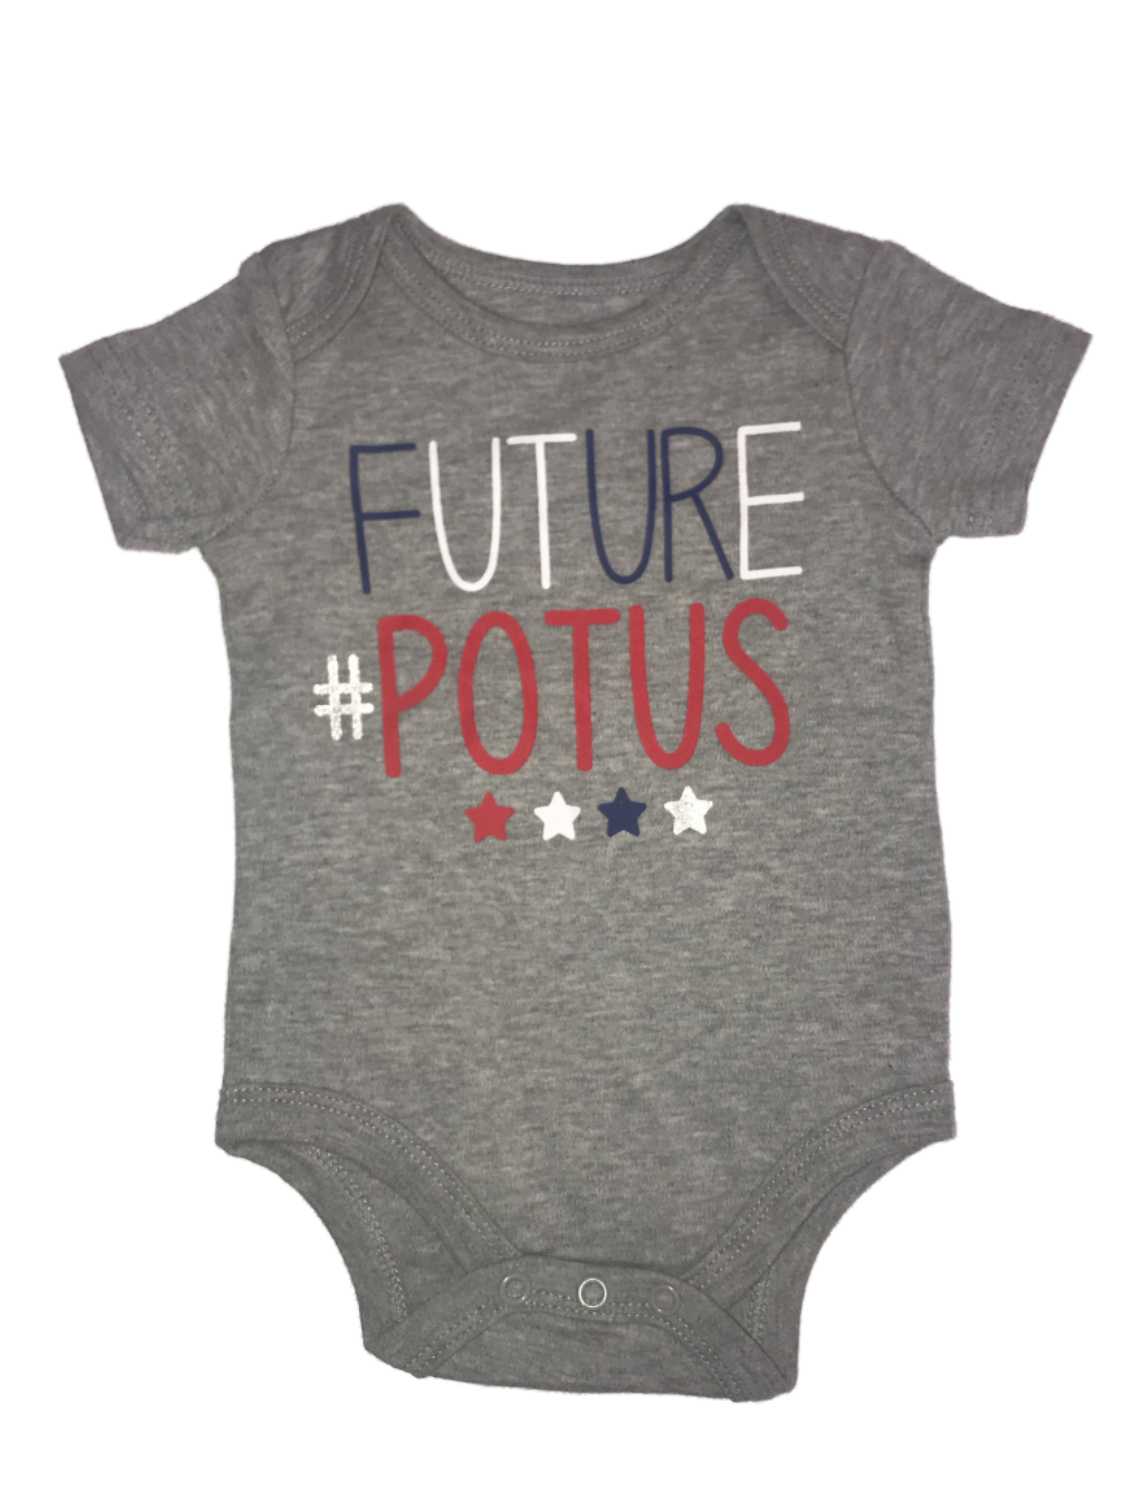 Carter's Infant Boys Girls Gray Patriotic "Future #POTUS" Bodysuit President Baby Outfit